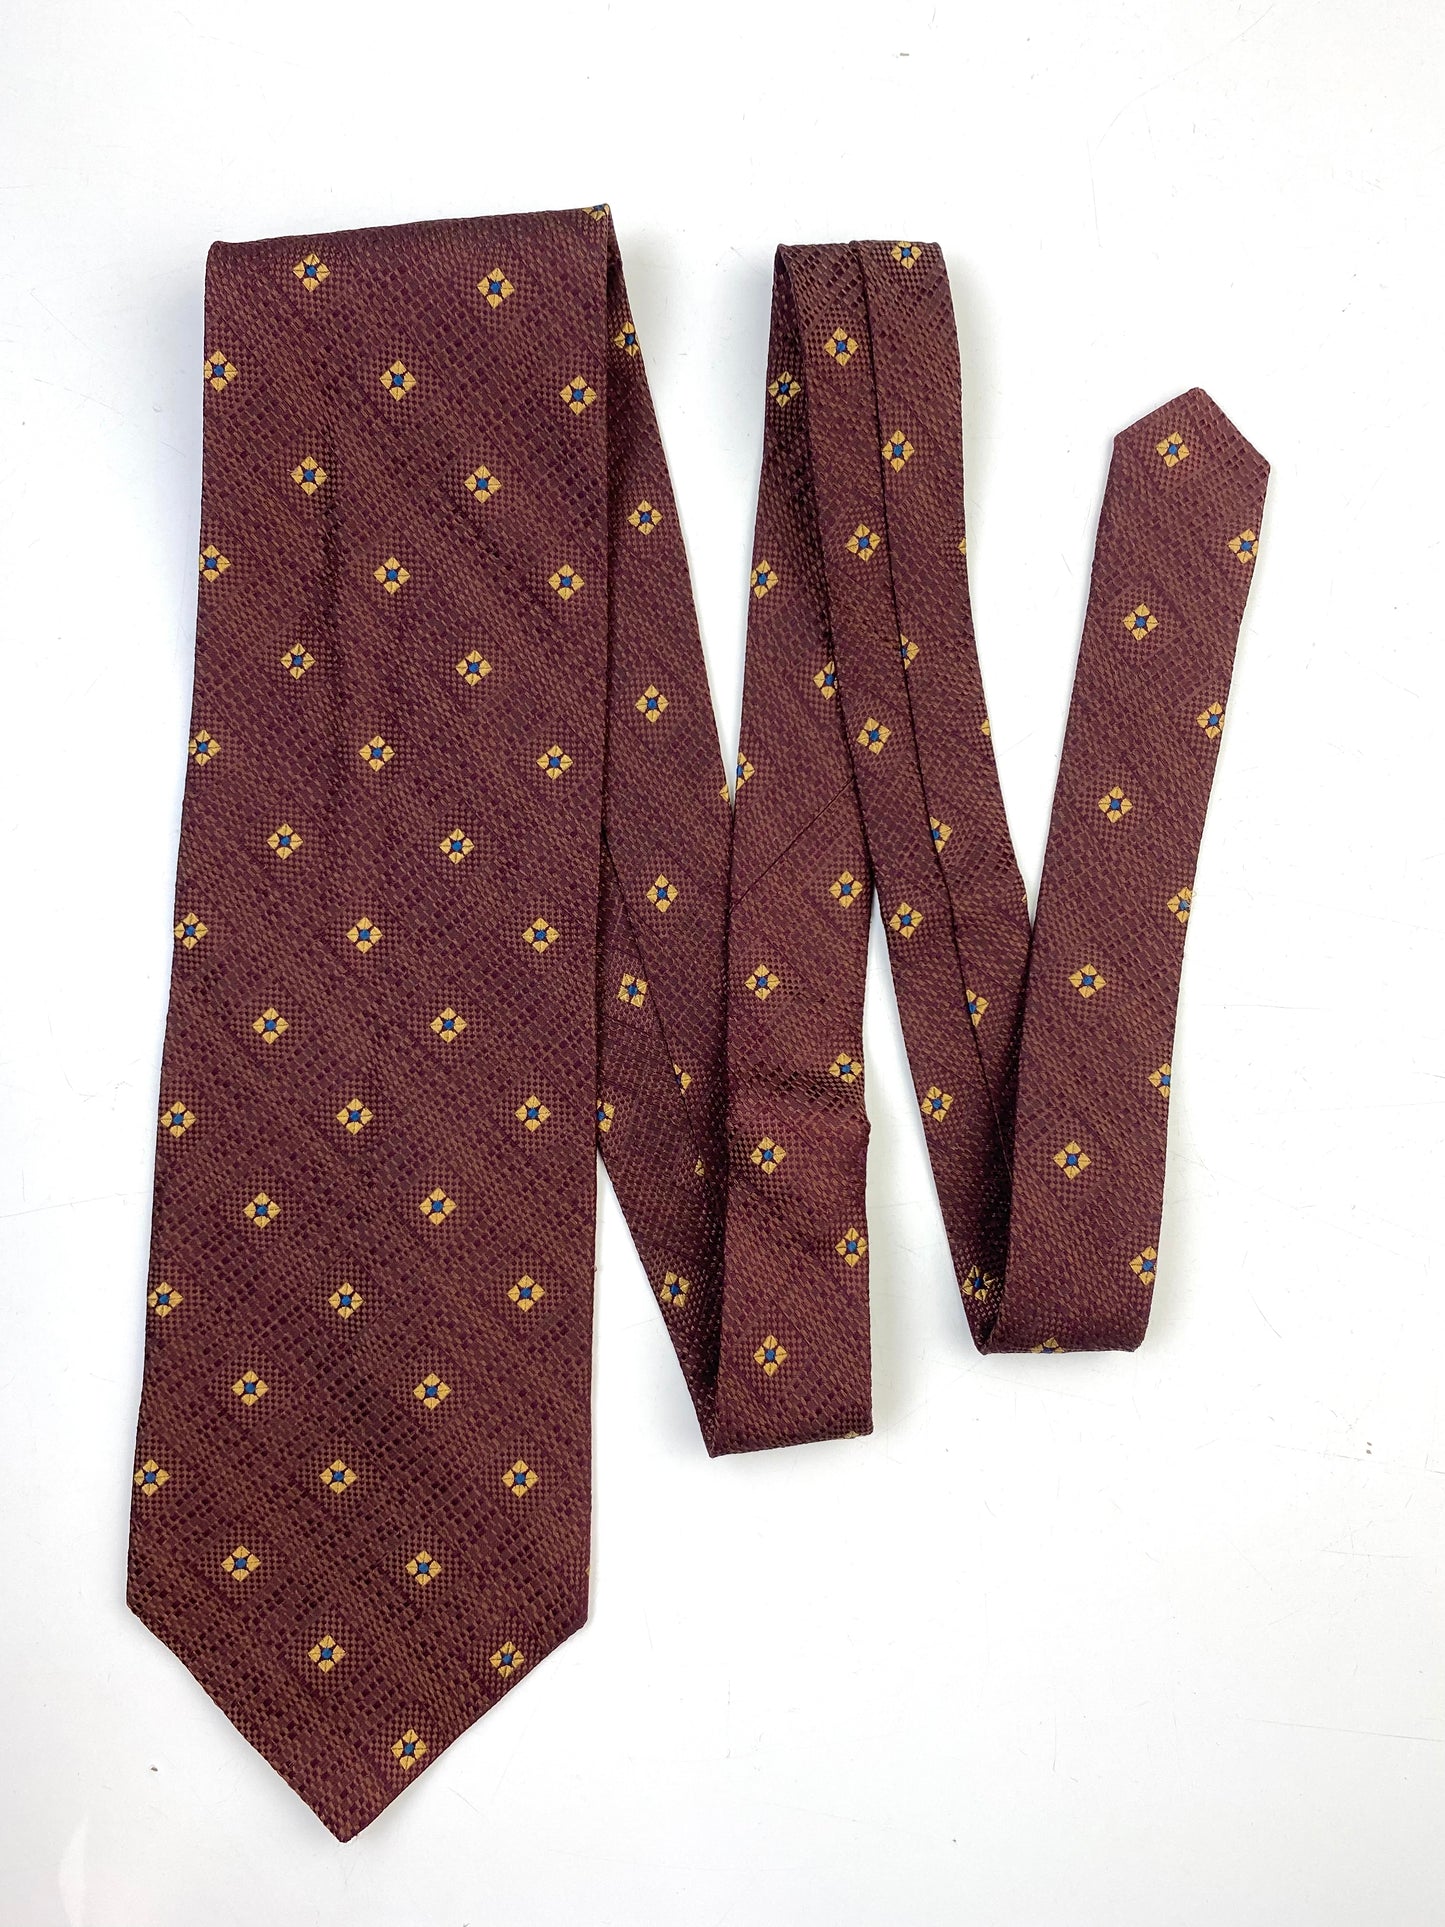 90s Deadstock Silk Necktie, Men's Vintage Brown/ Gold Geometric Pattern Tie, NOS